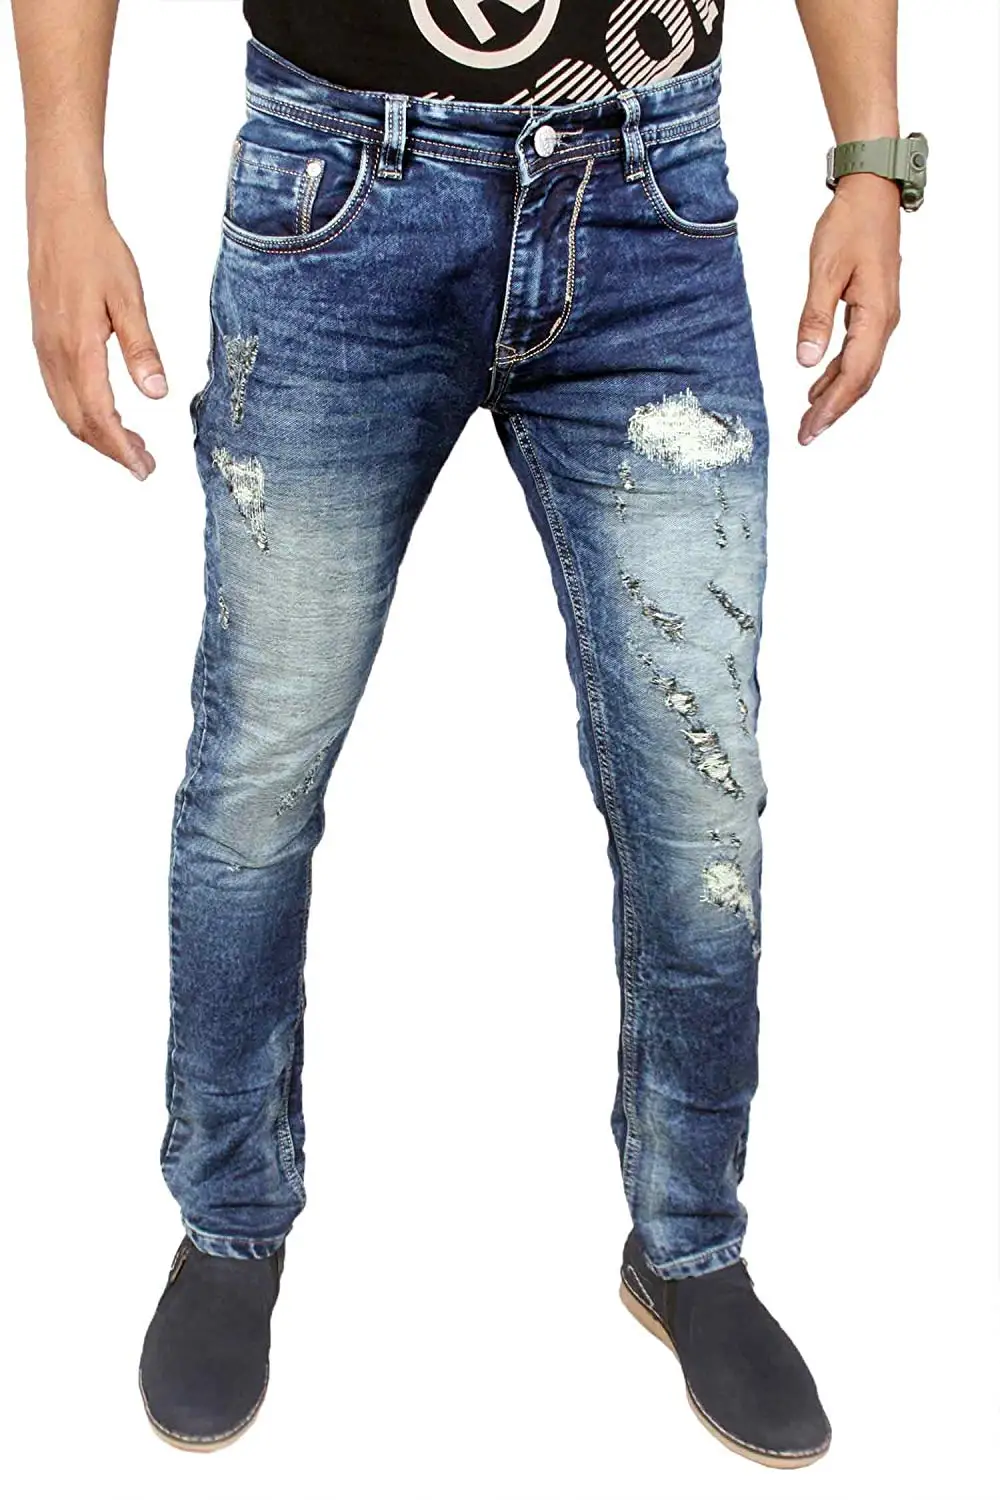 spykar jeans wholesale price